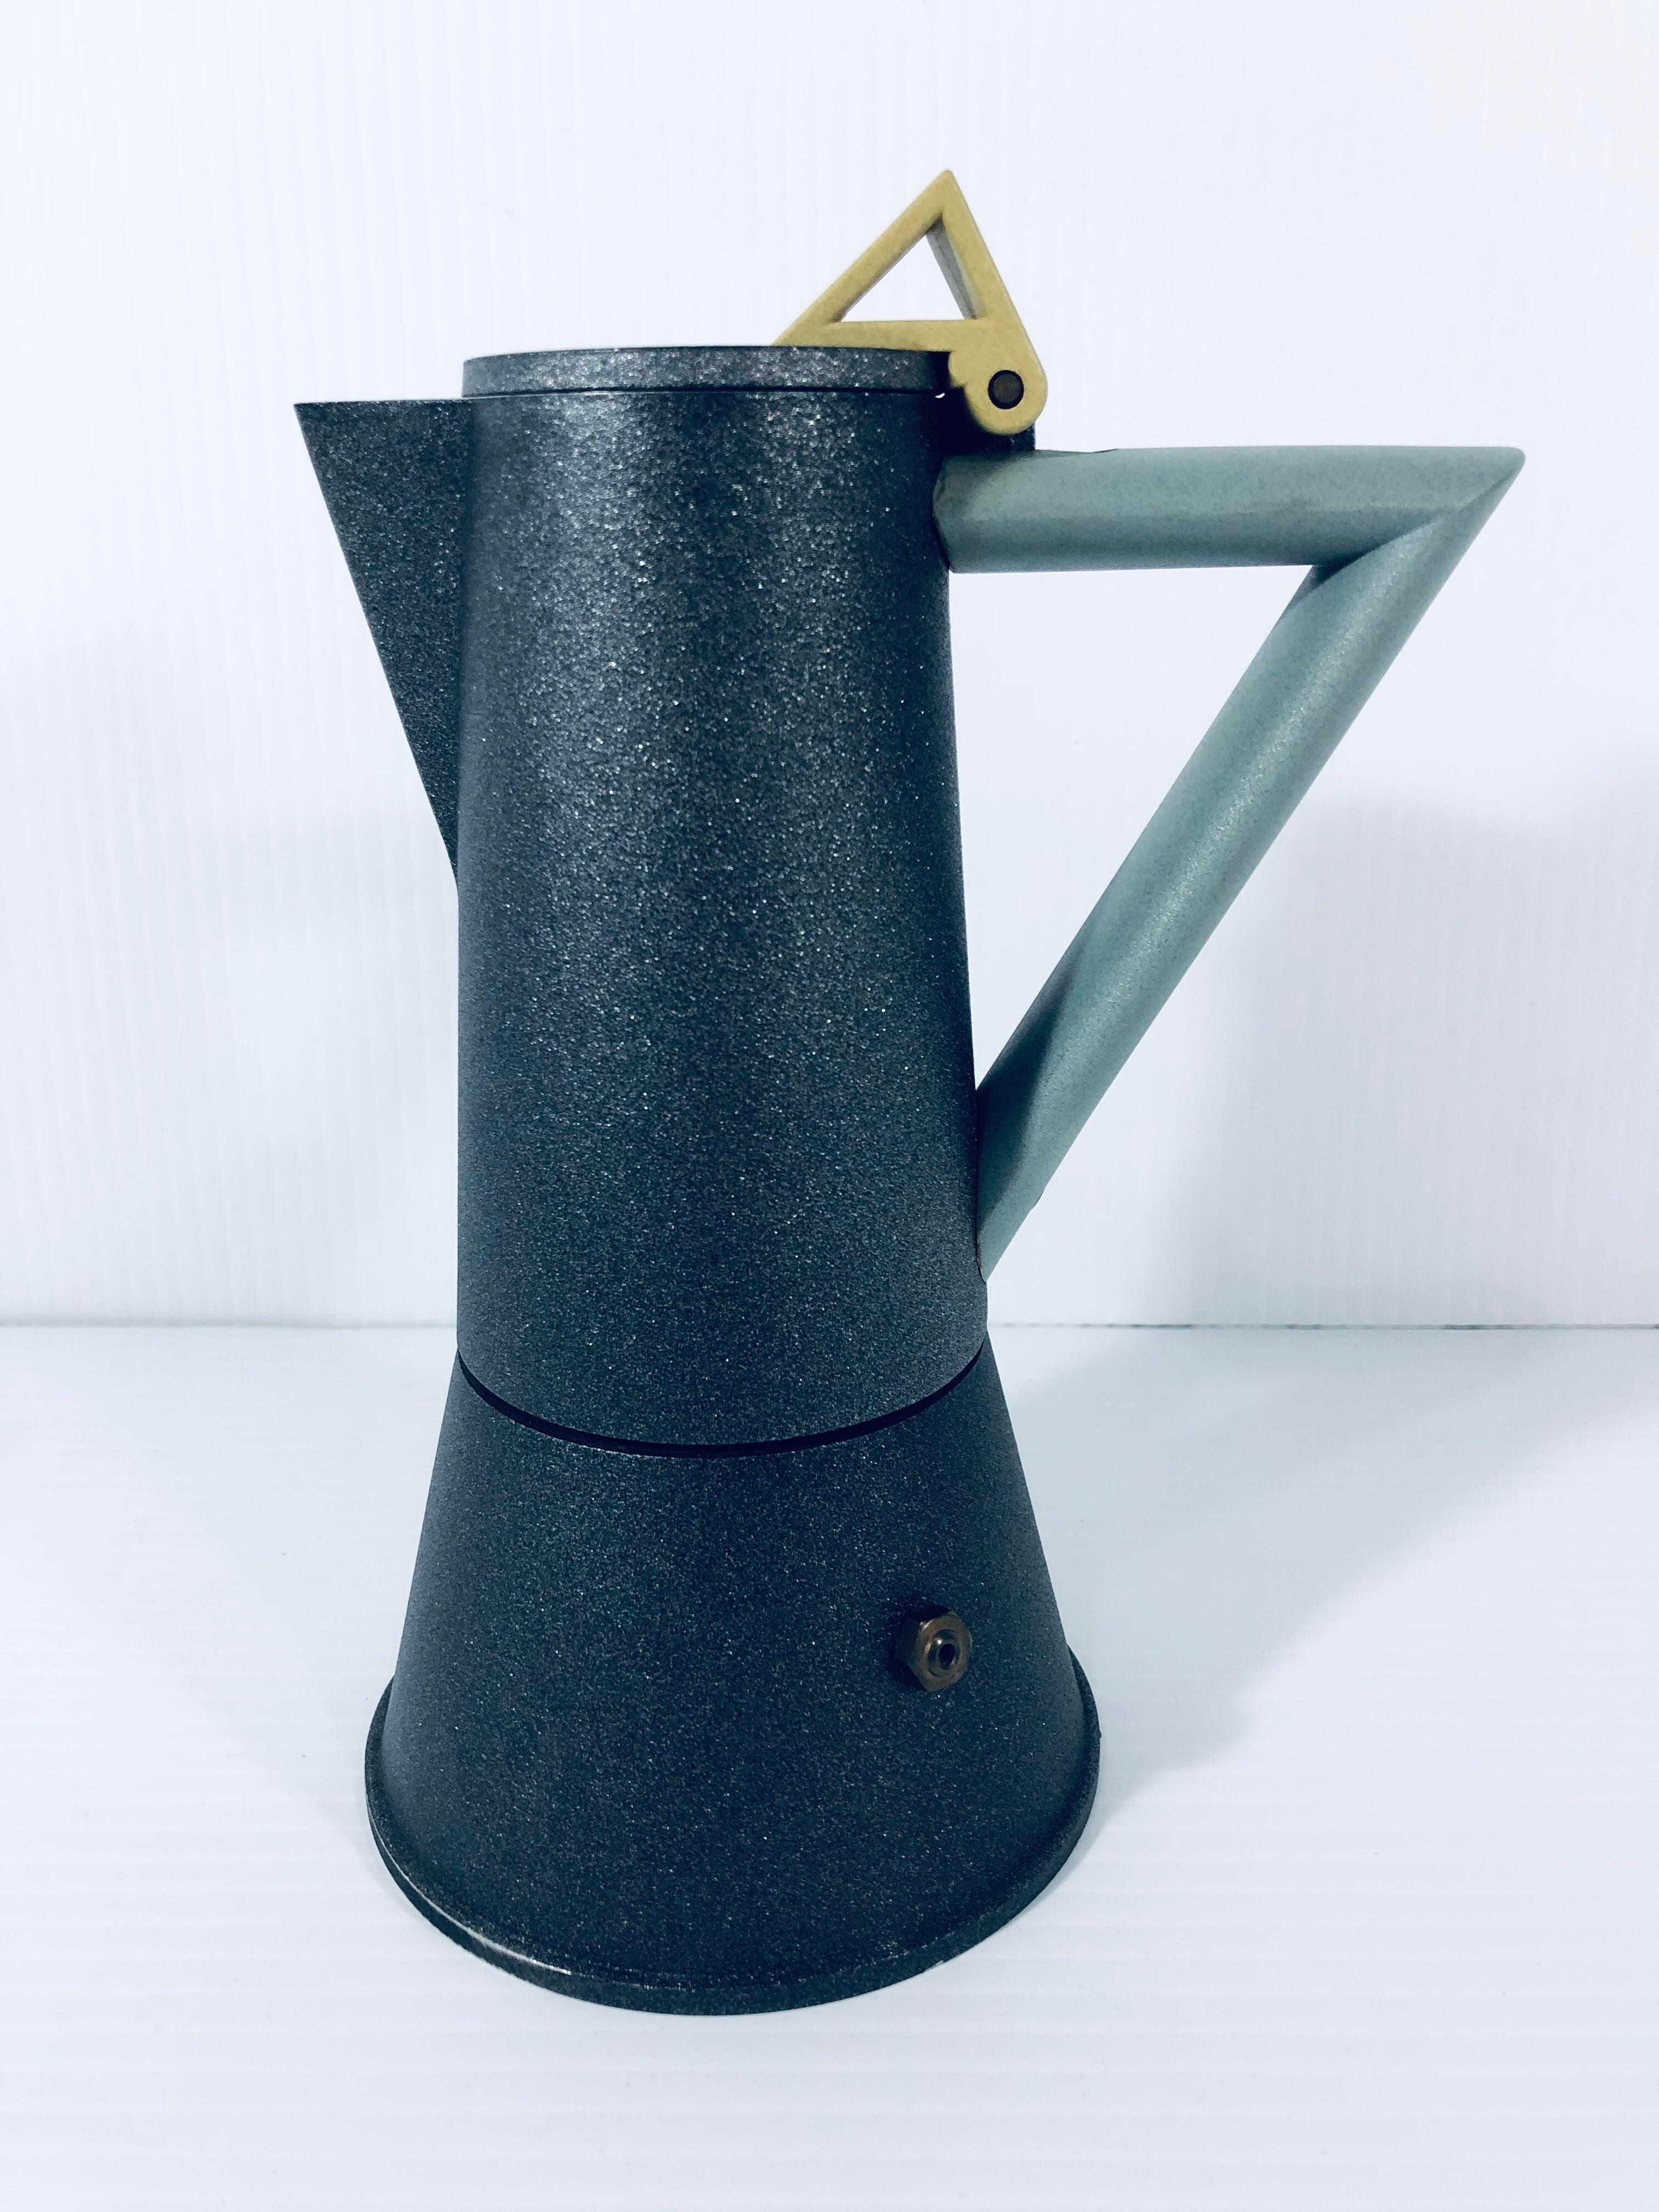 Lagostina espresso pot with original metal filter designed by Ettore Sottsass.